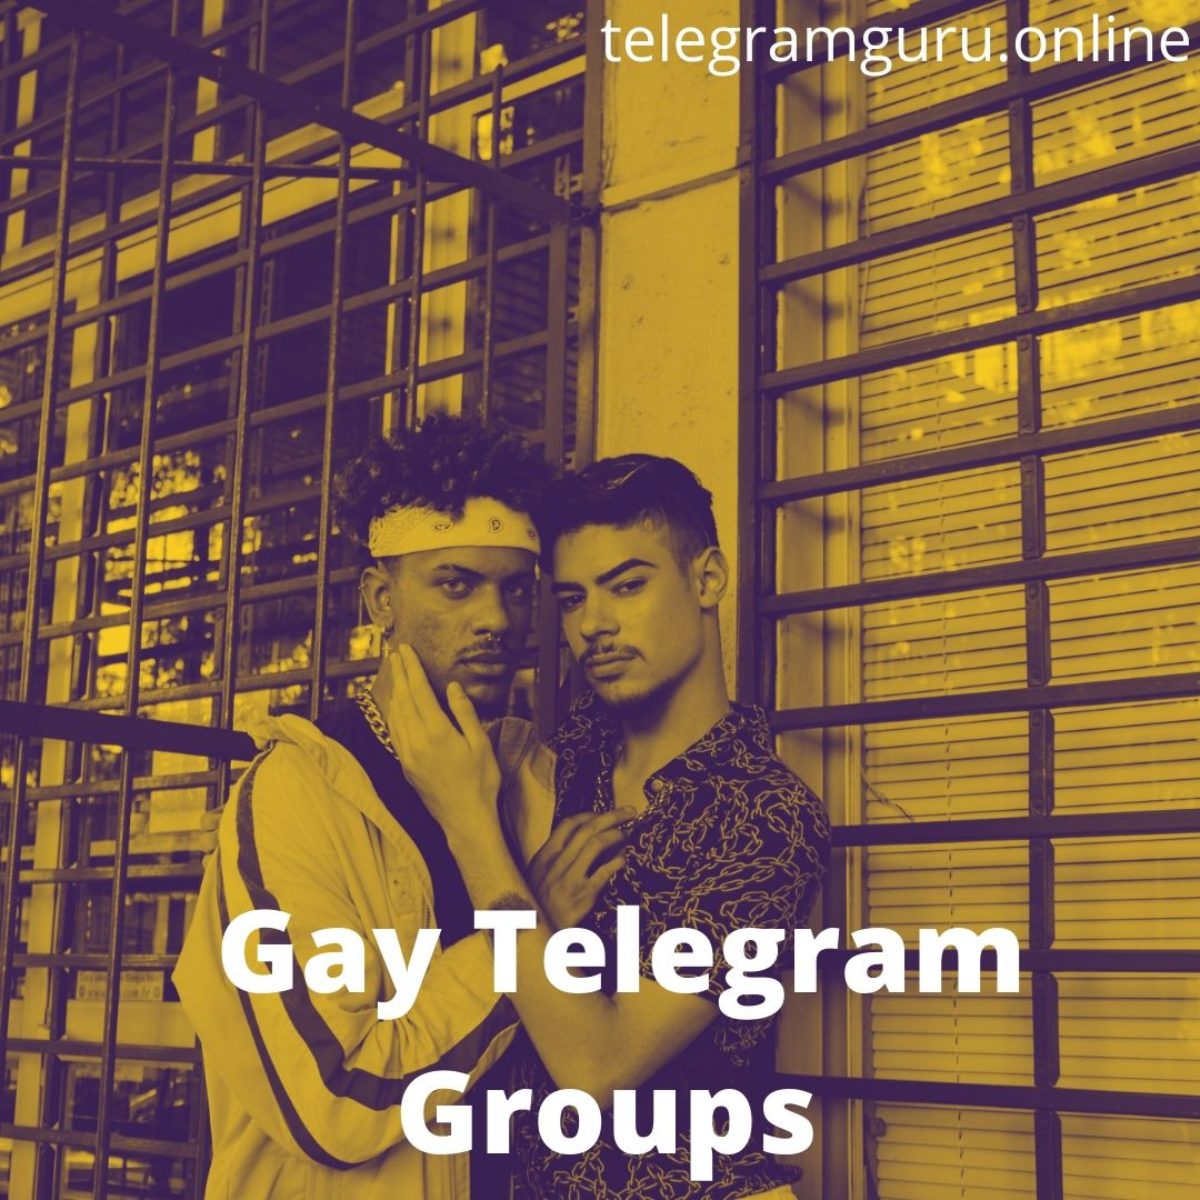 Telegram gay porn groups